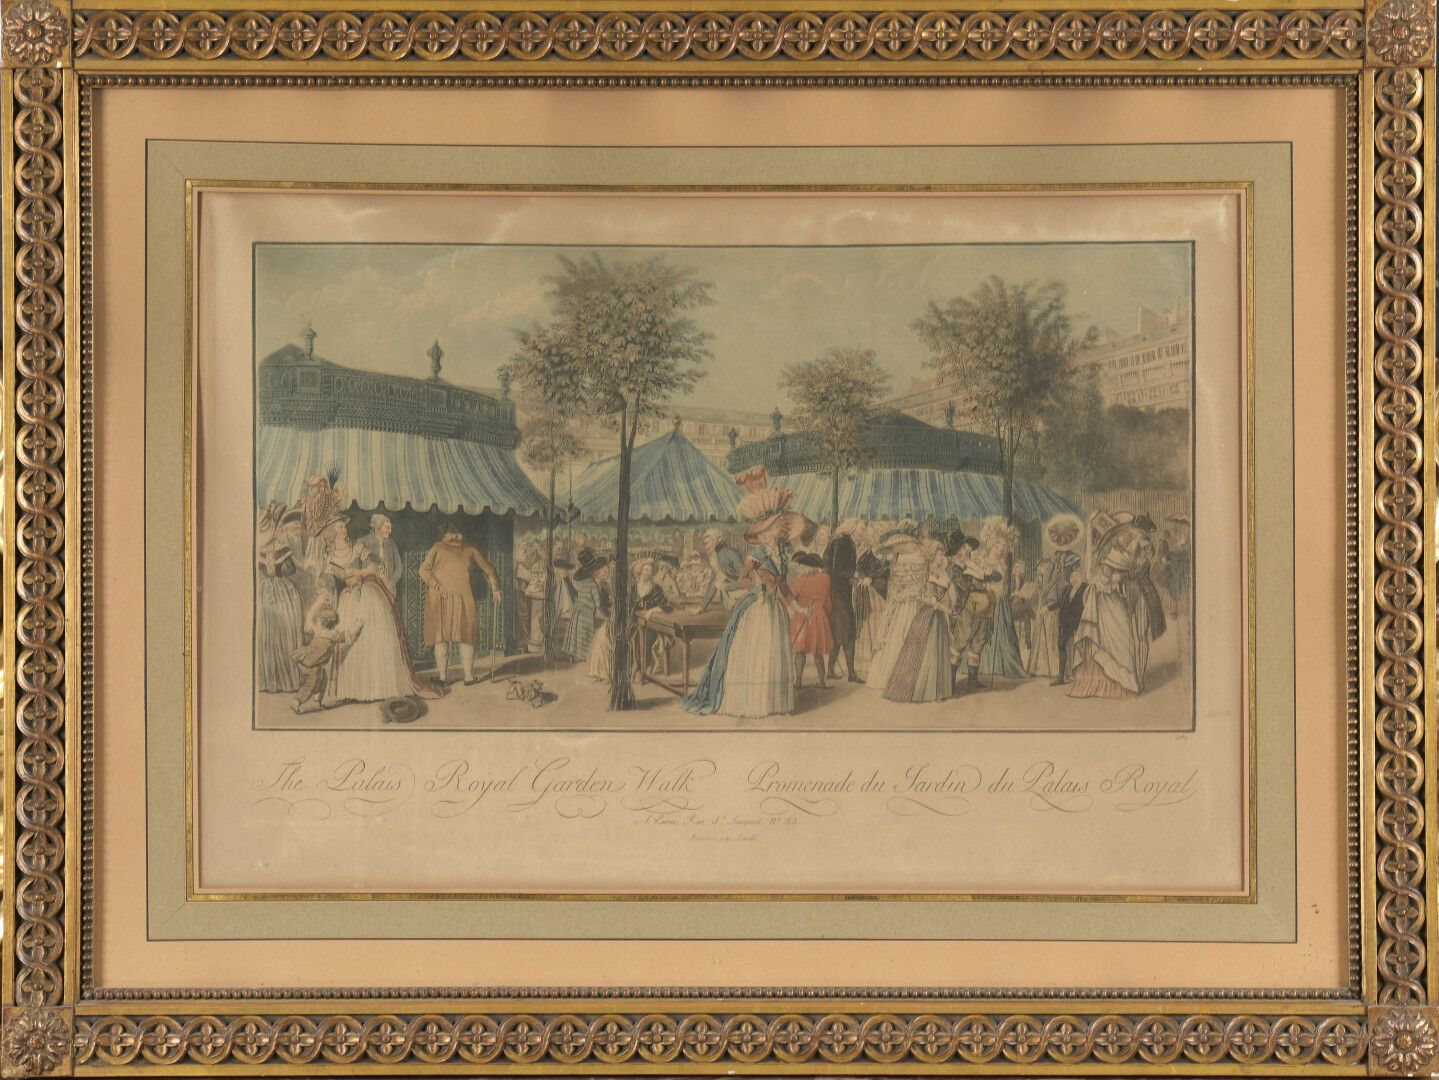 Null After DUBUCOURT, 19th century

Promenade of the Palais-Royal garden

Promen&hellip;